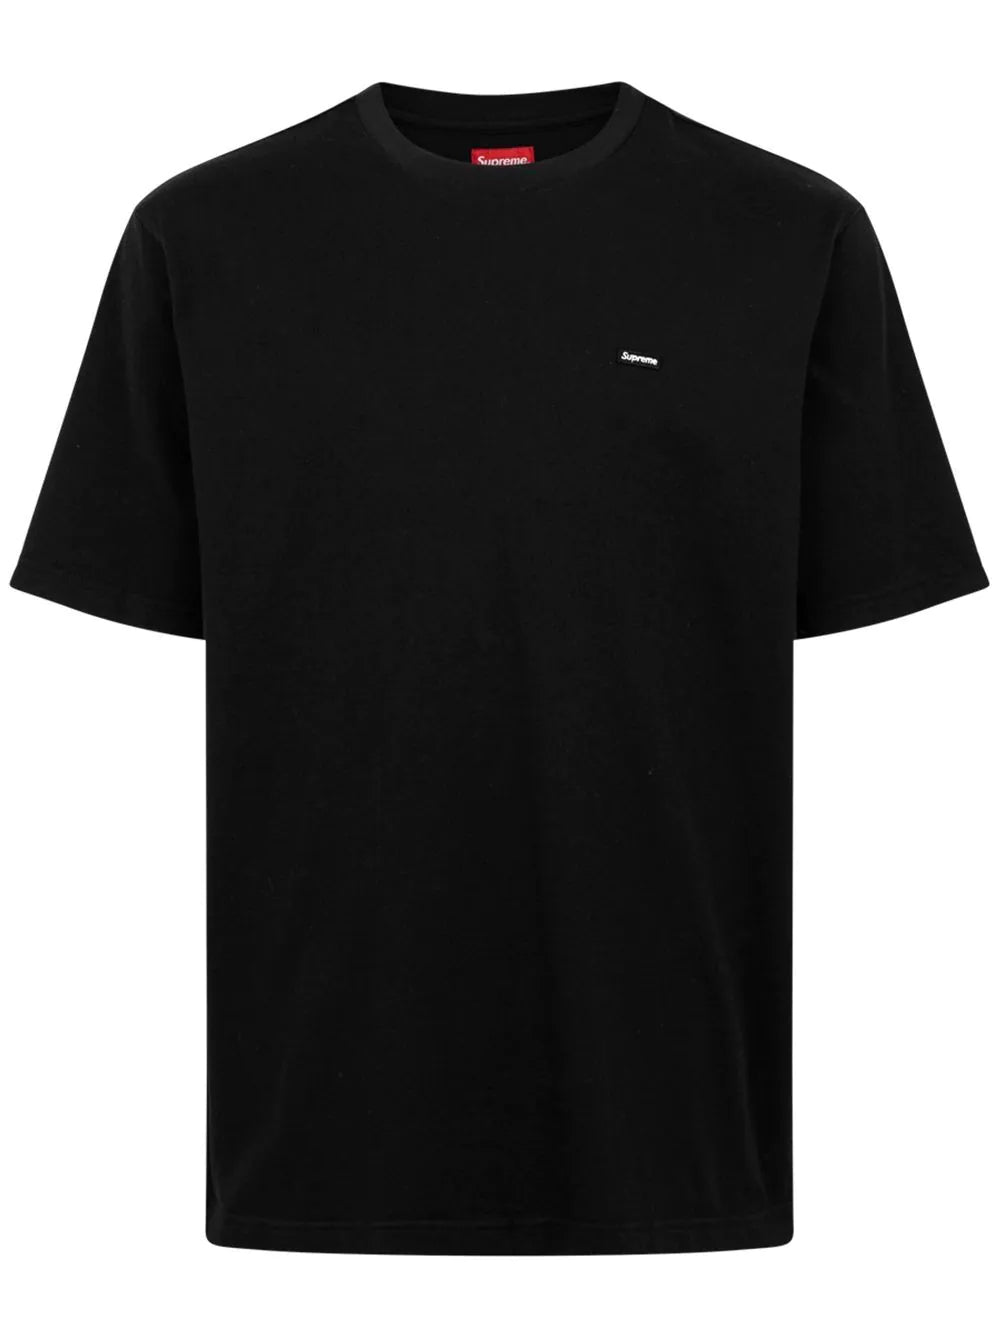 Supreme Small Box Logo T-Shirt (Black)